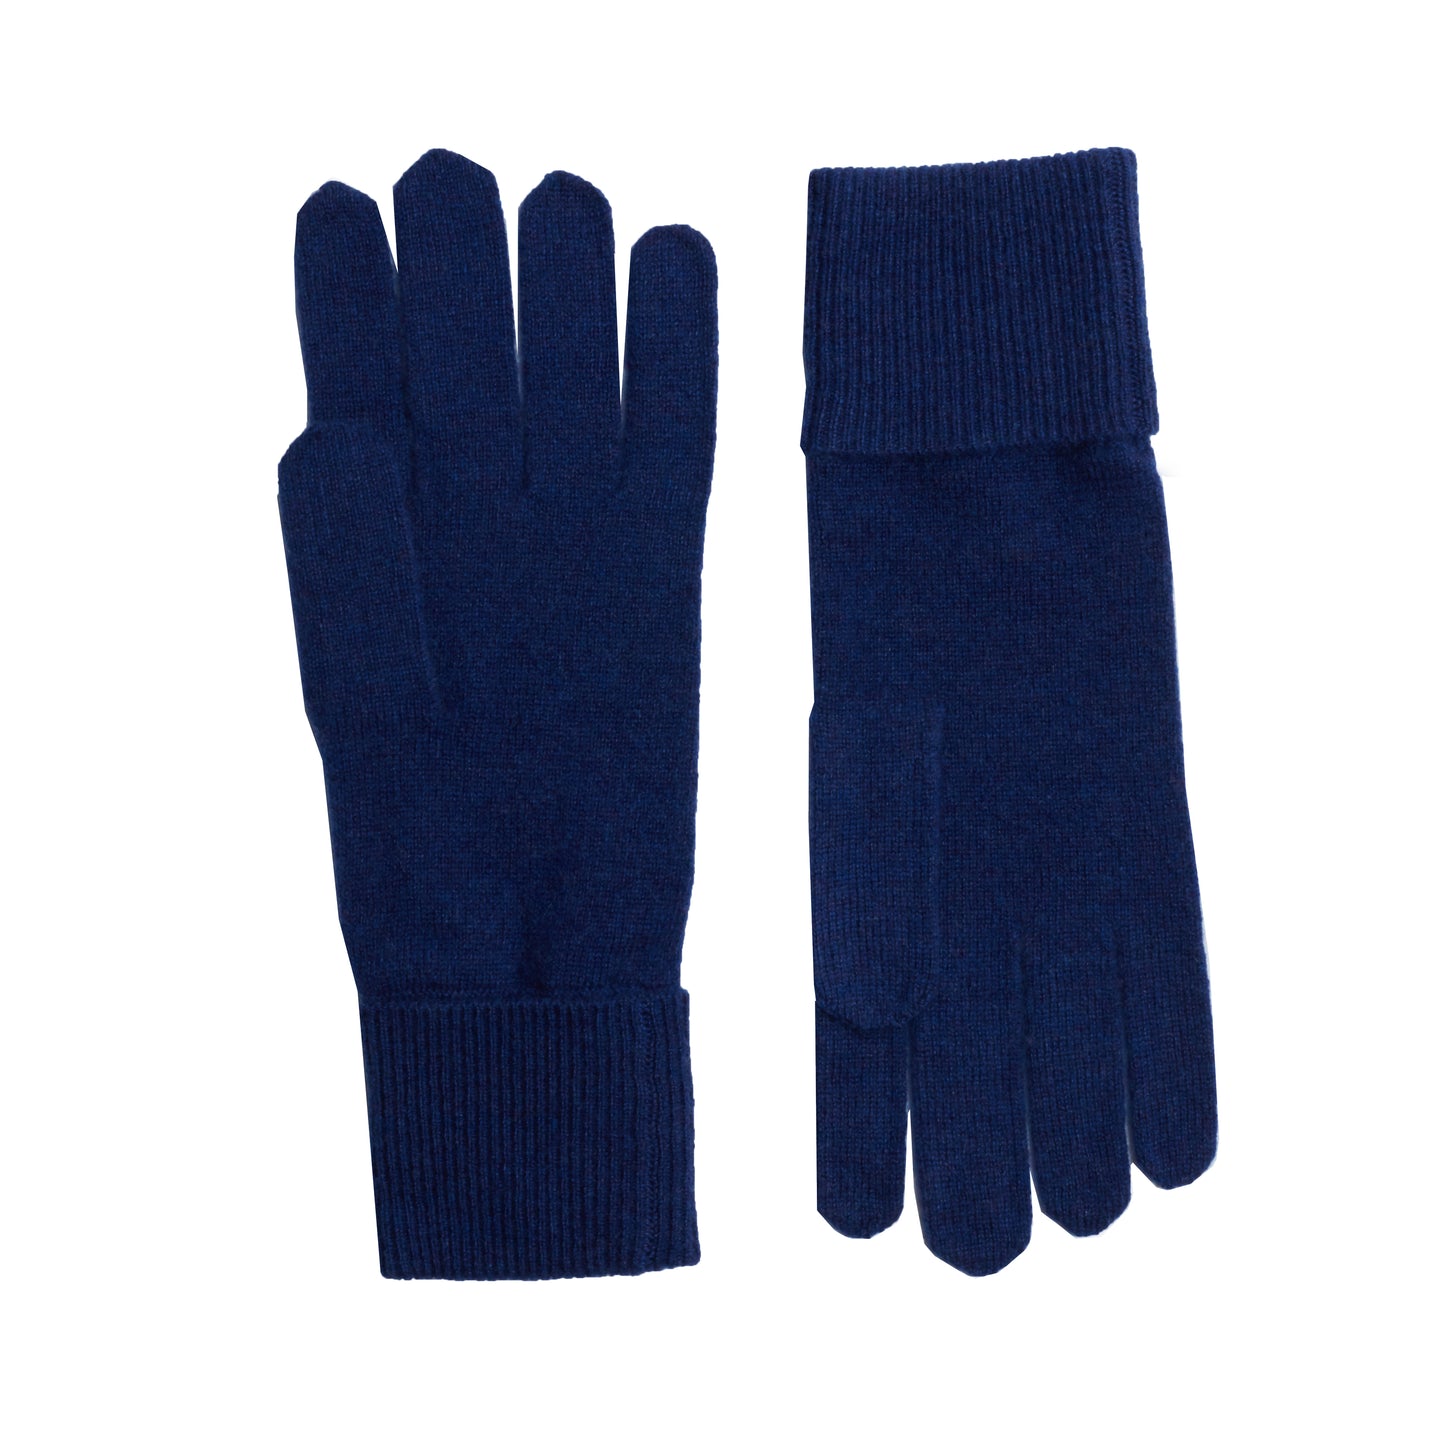 JENNIE LIU 100% Cashmere Knitted Gloves